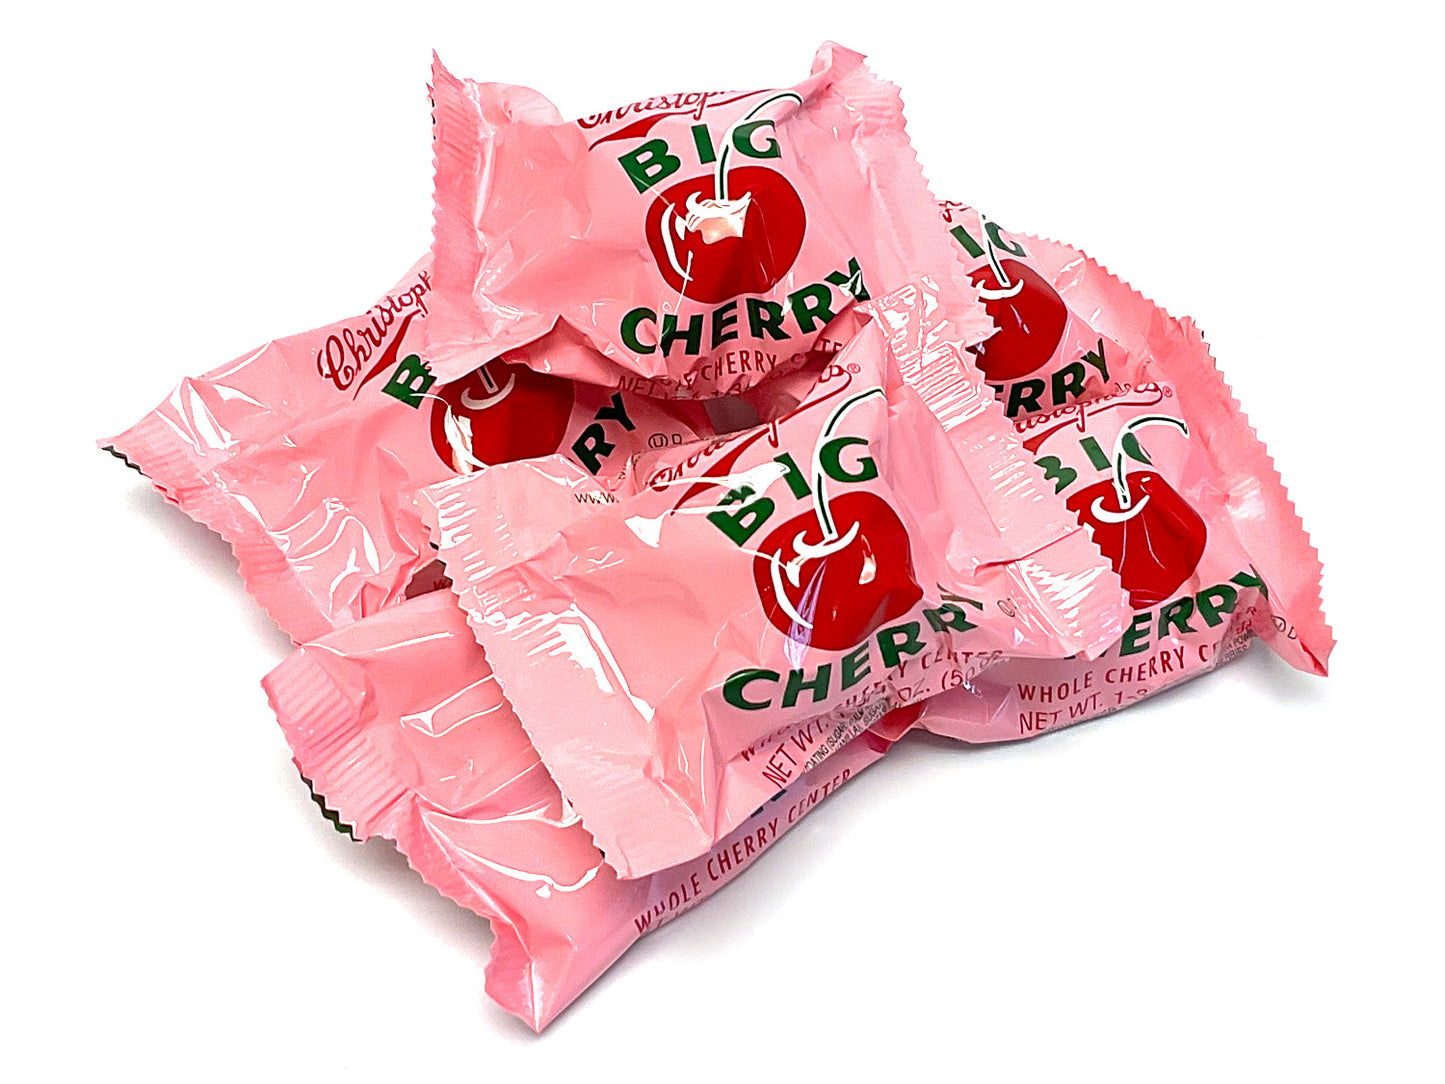 Big Cherry - 1.75 oz bar - 6 bars